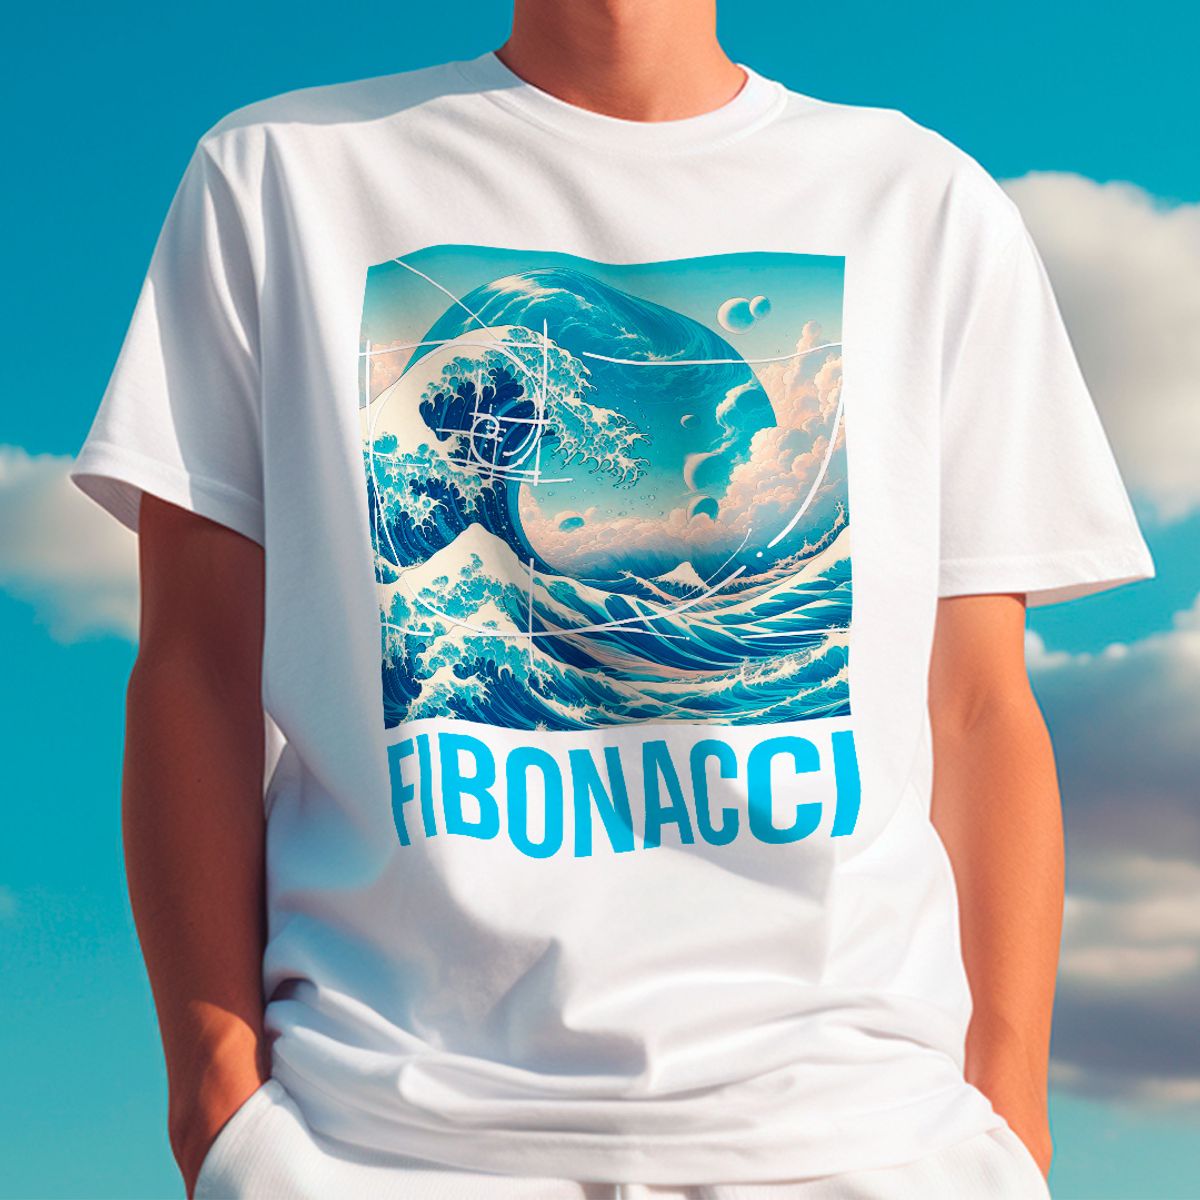 Nome do produto: Camiseta Onda Fibonacci